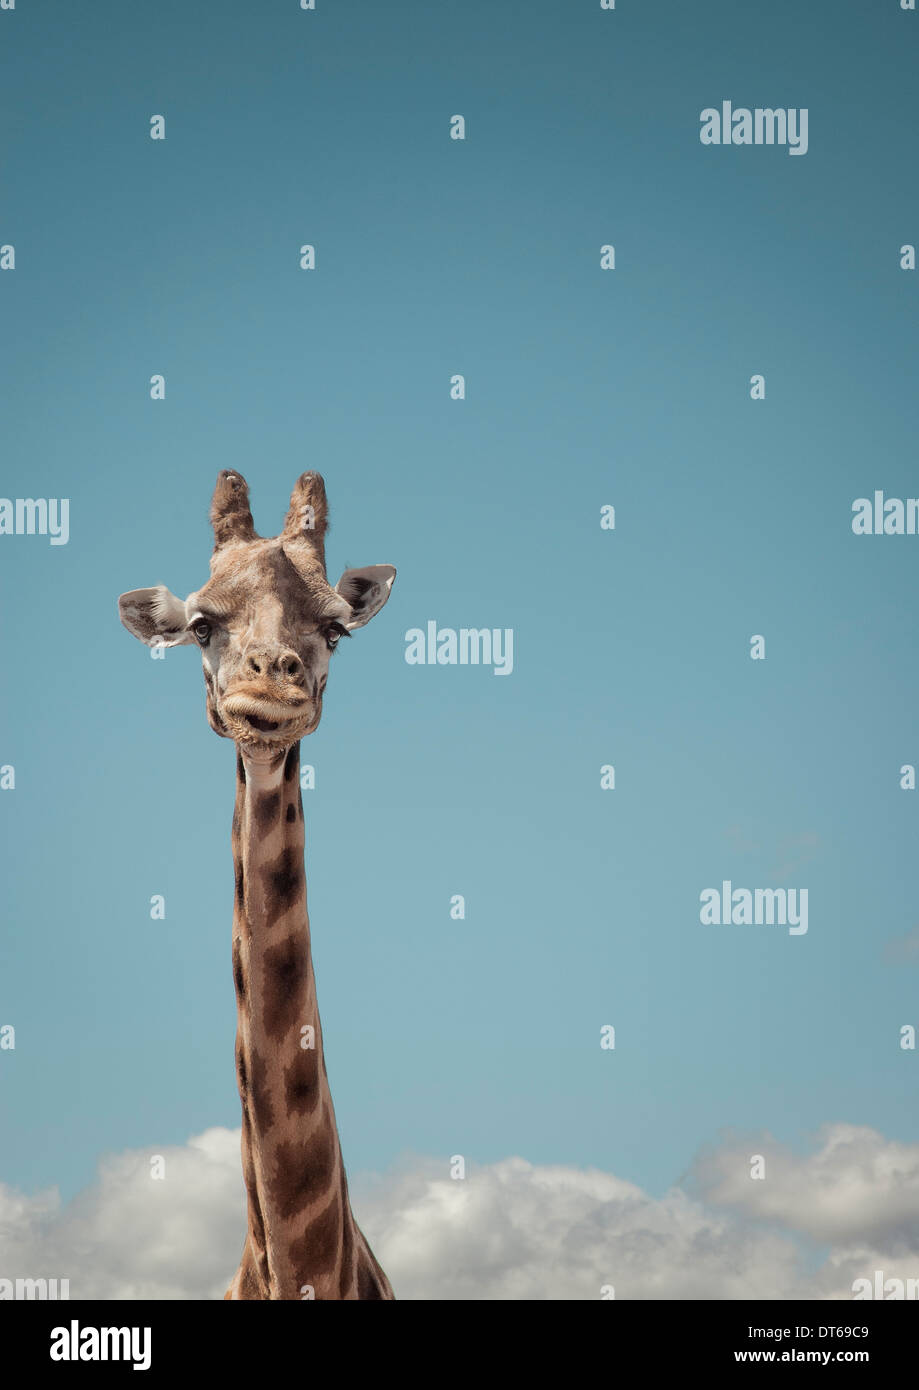 Portrait of giraffe and blue sky Stock Photo